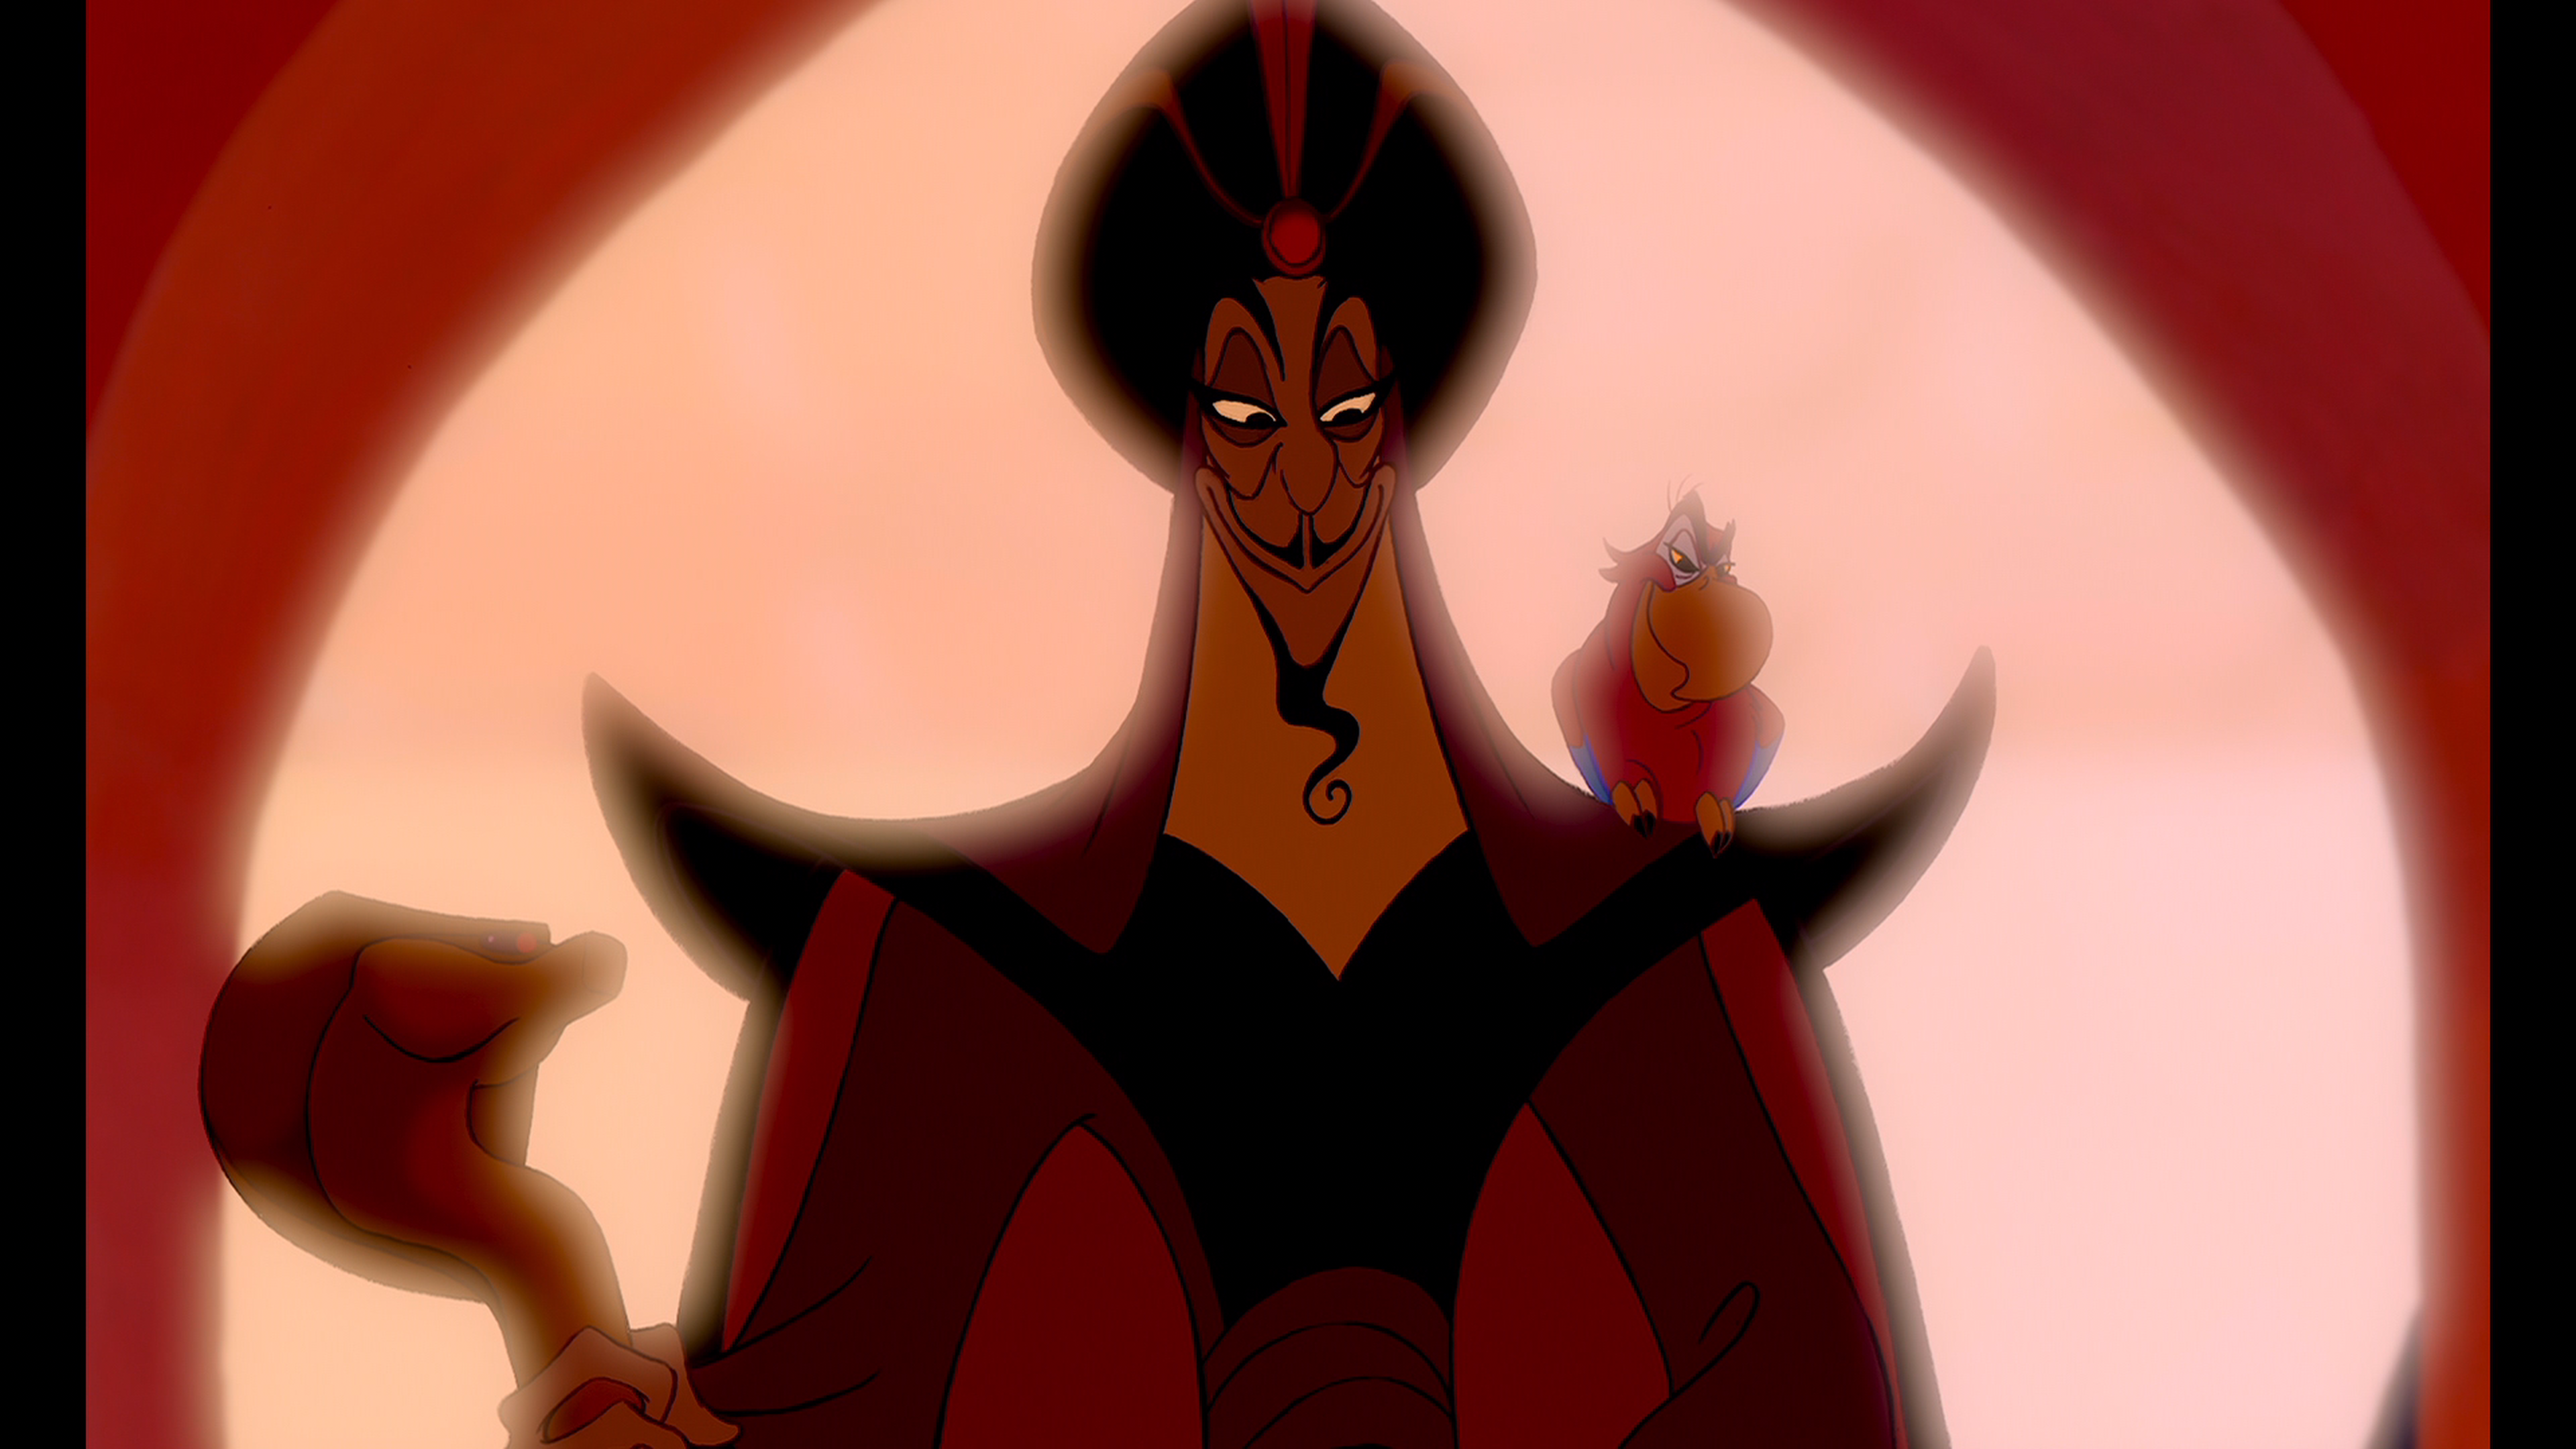 4K Review: Disney's Original Aladdin Is as Good as You Remember